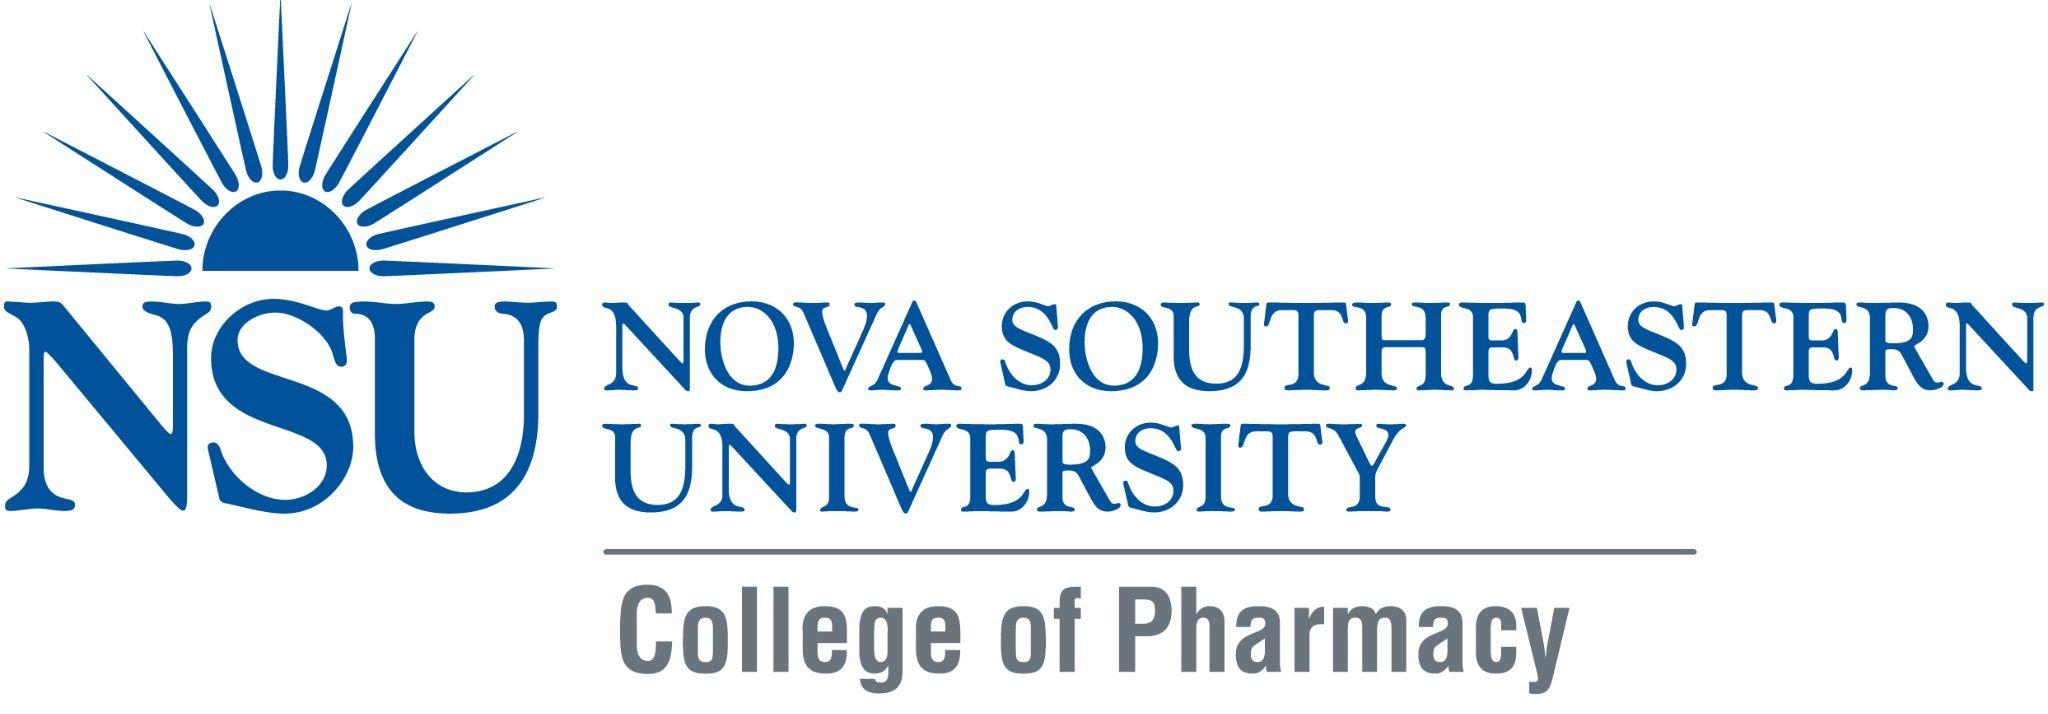 Nova Southeastern University Logo - Nova Southeastern University College of Pharmacy